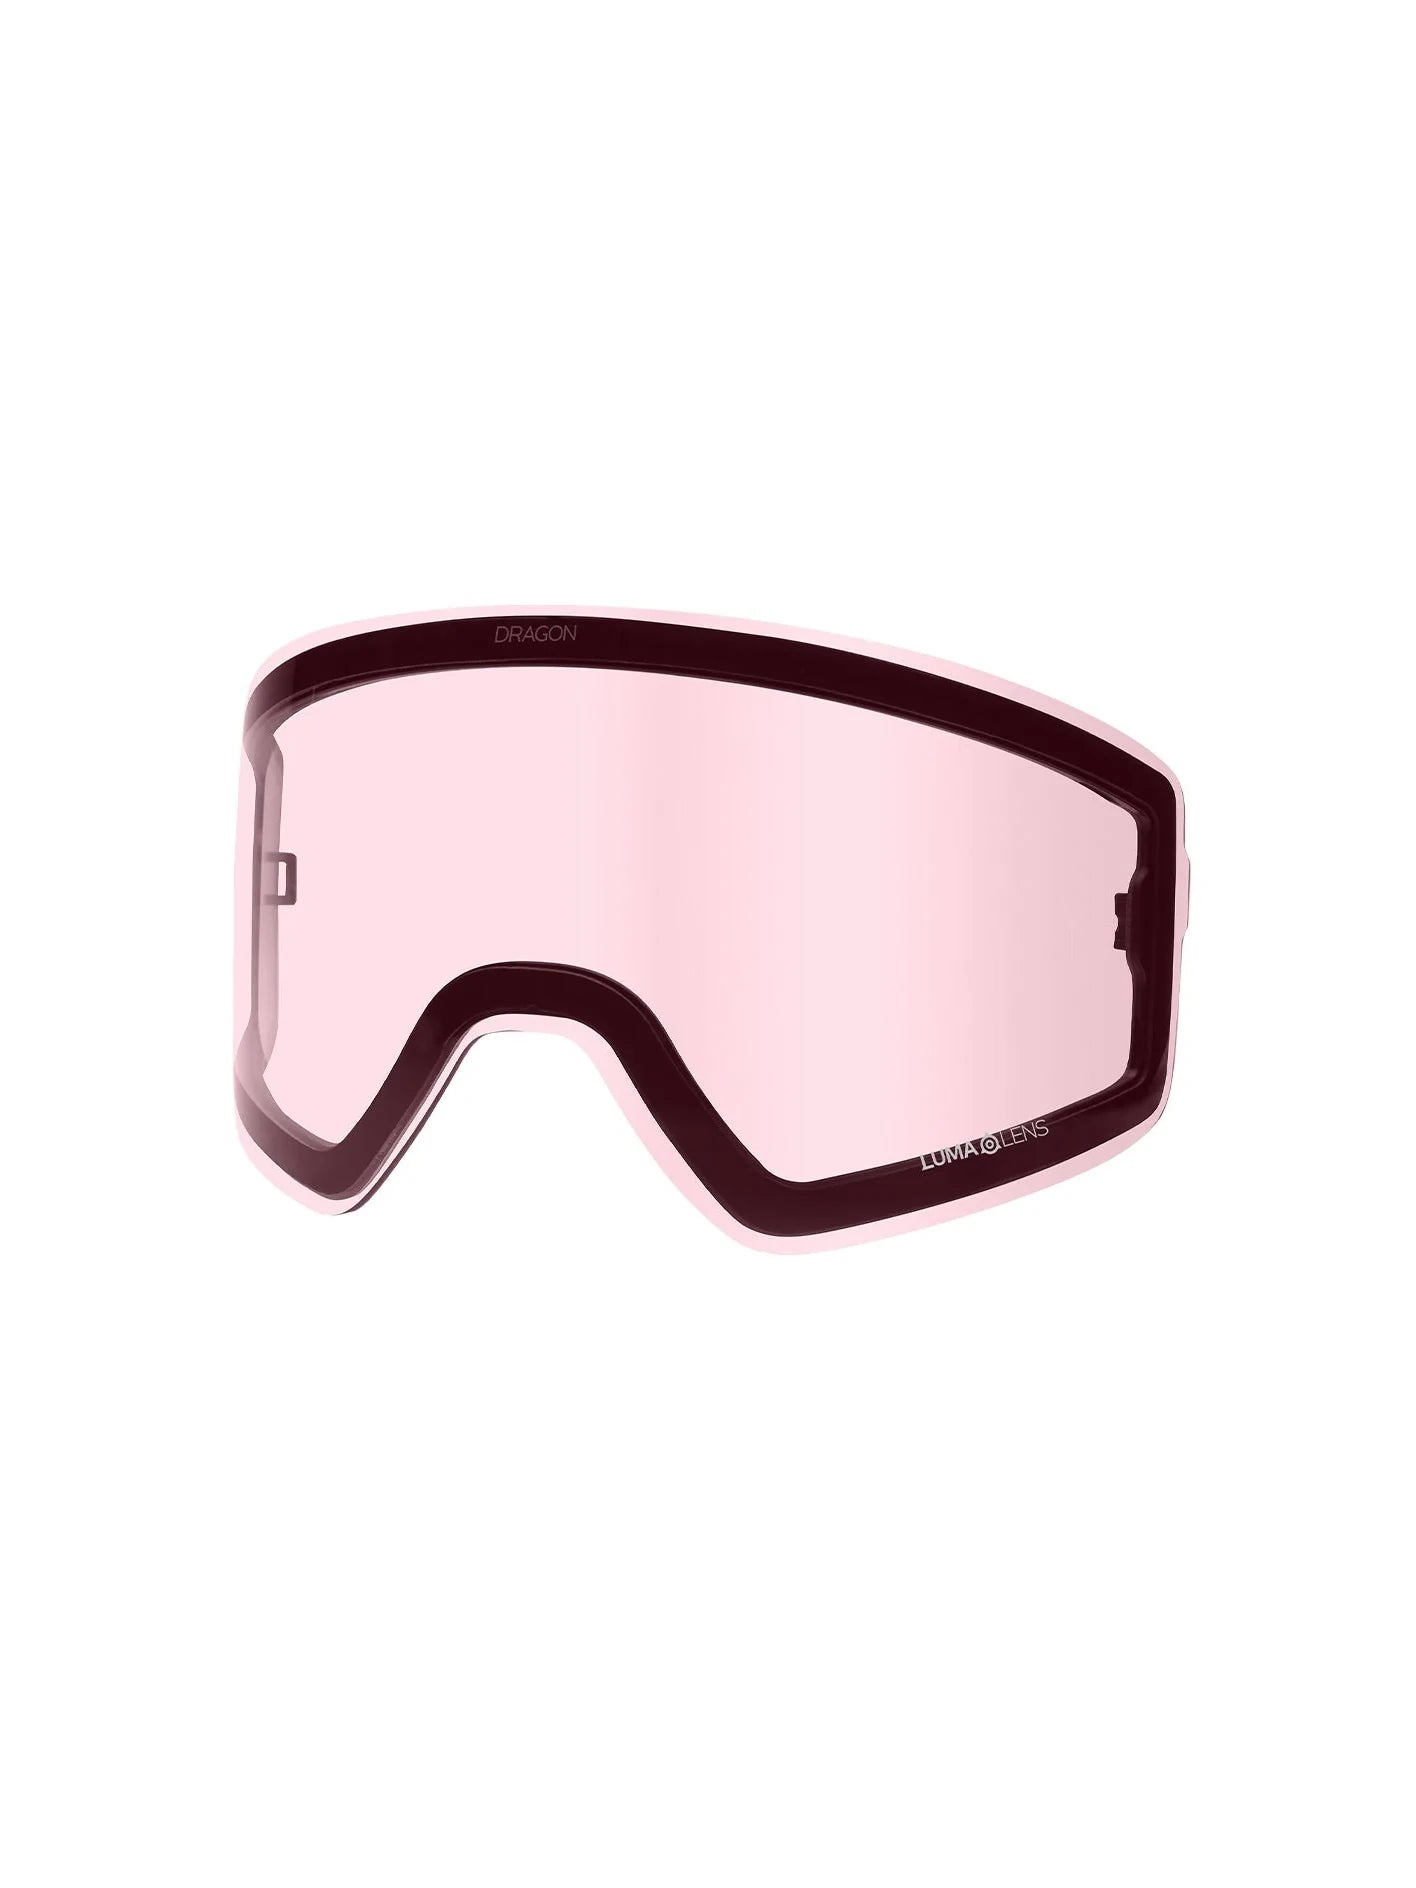 Dragon PXV2 - Koi with Lumalens Red Ionized & Lumalens Light Rose Lens | Dragon | Gafas de snowboard | Snowboard Shop | surfdevils.com